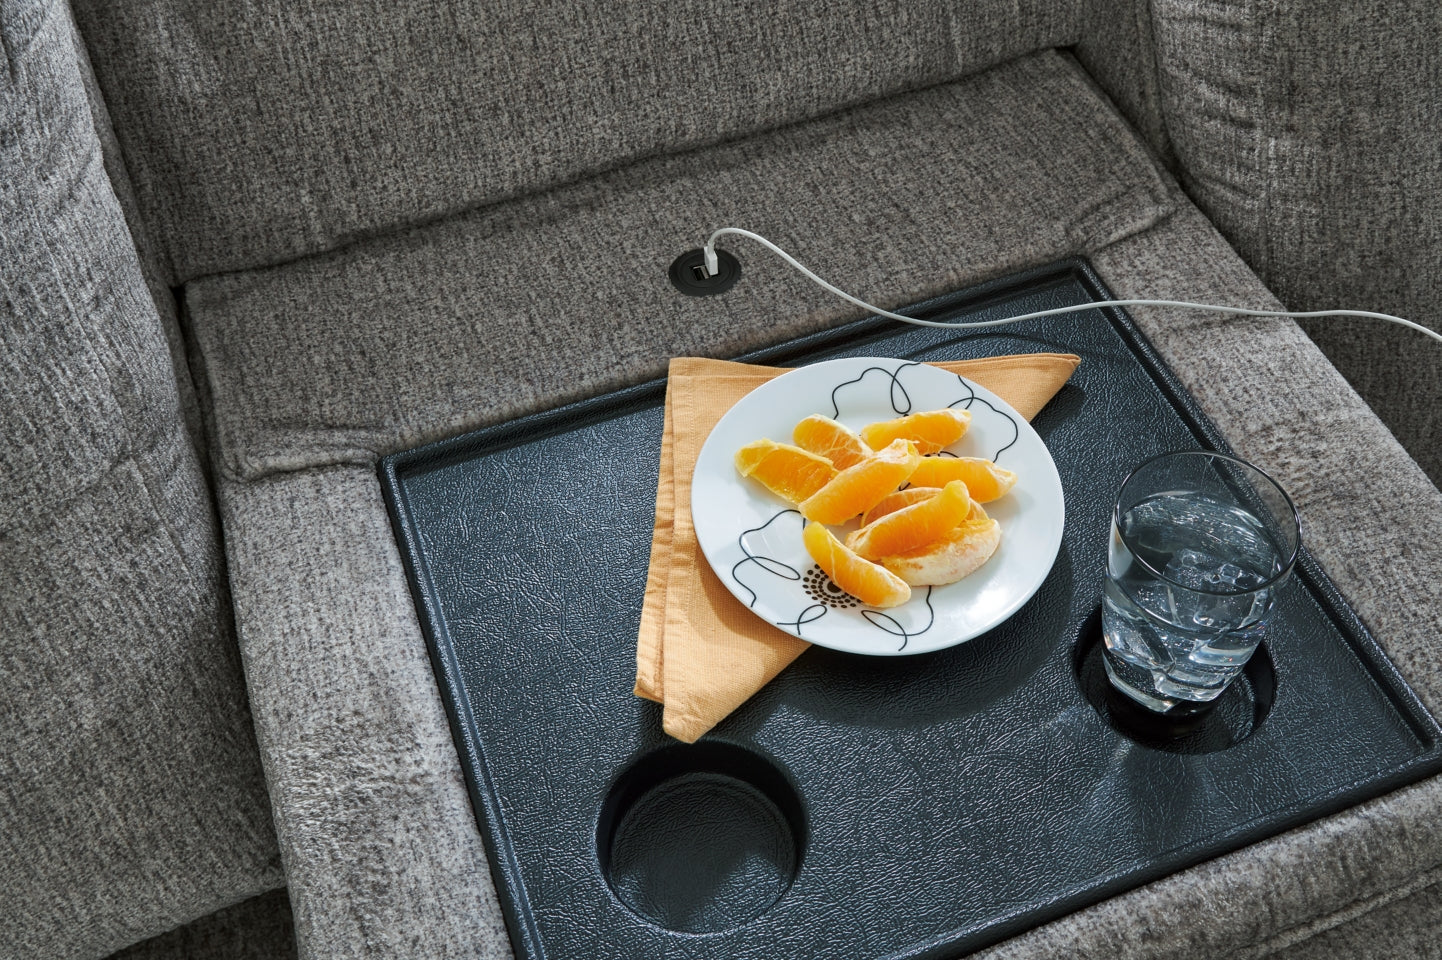 Bindura Sofa and Loveseat - furniture place usa